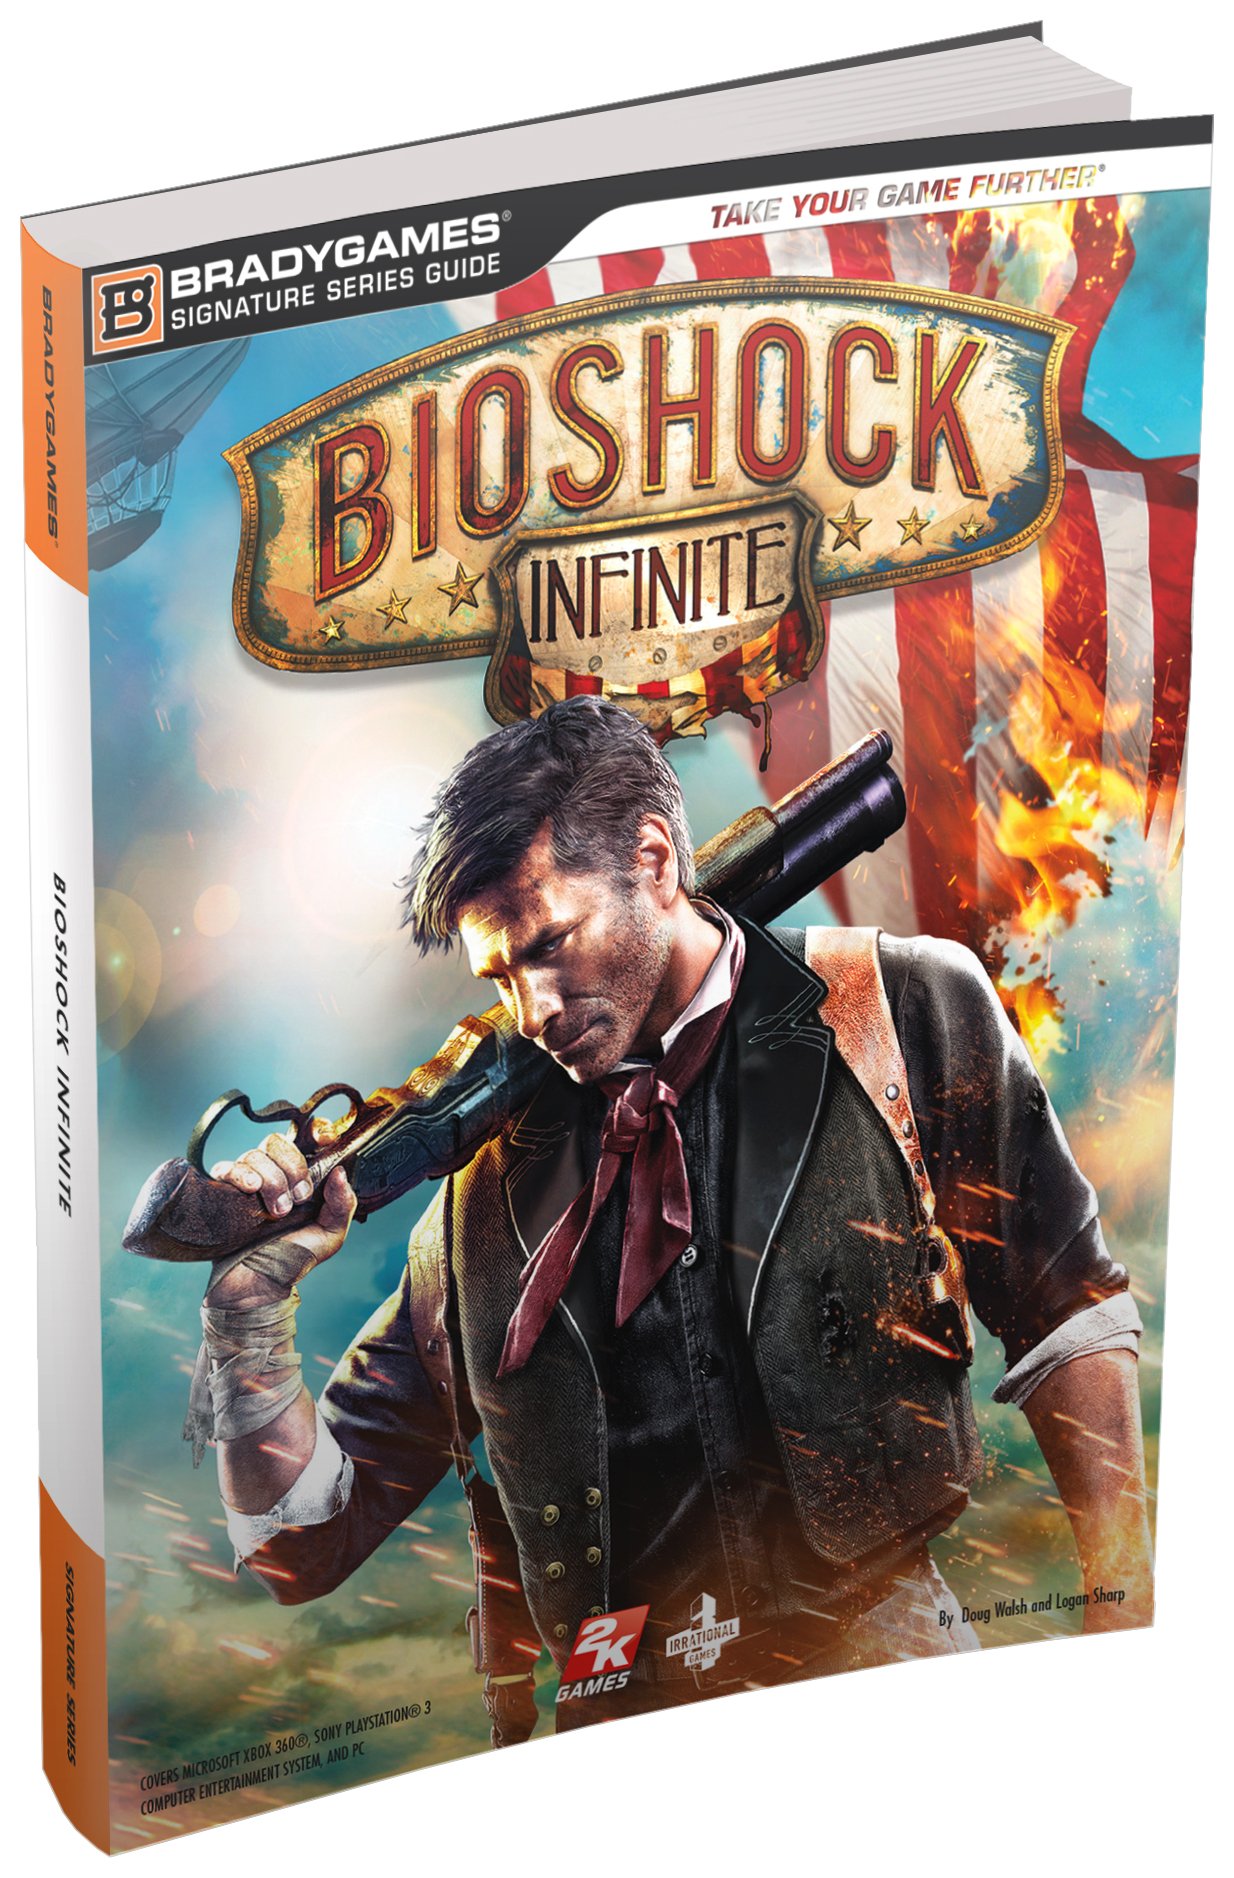 BioShock Infinite Steam Charts & Stats